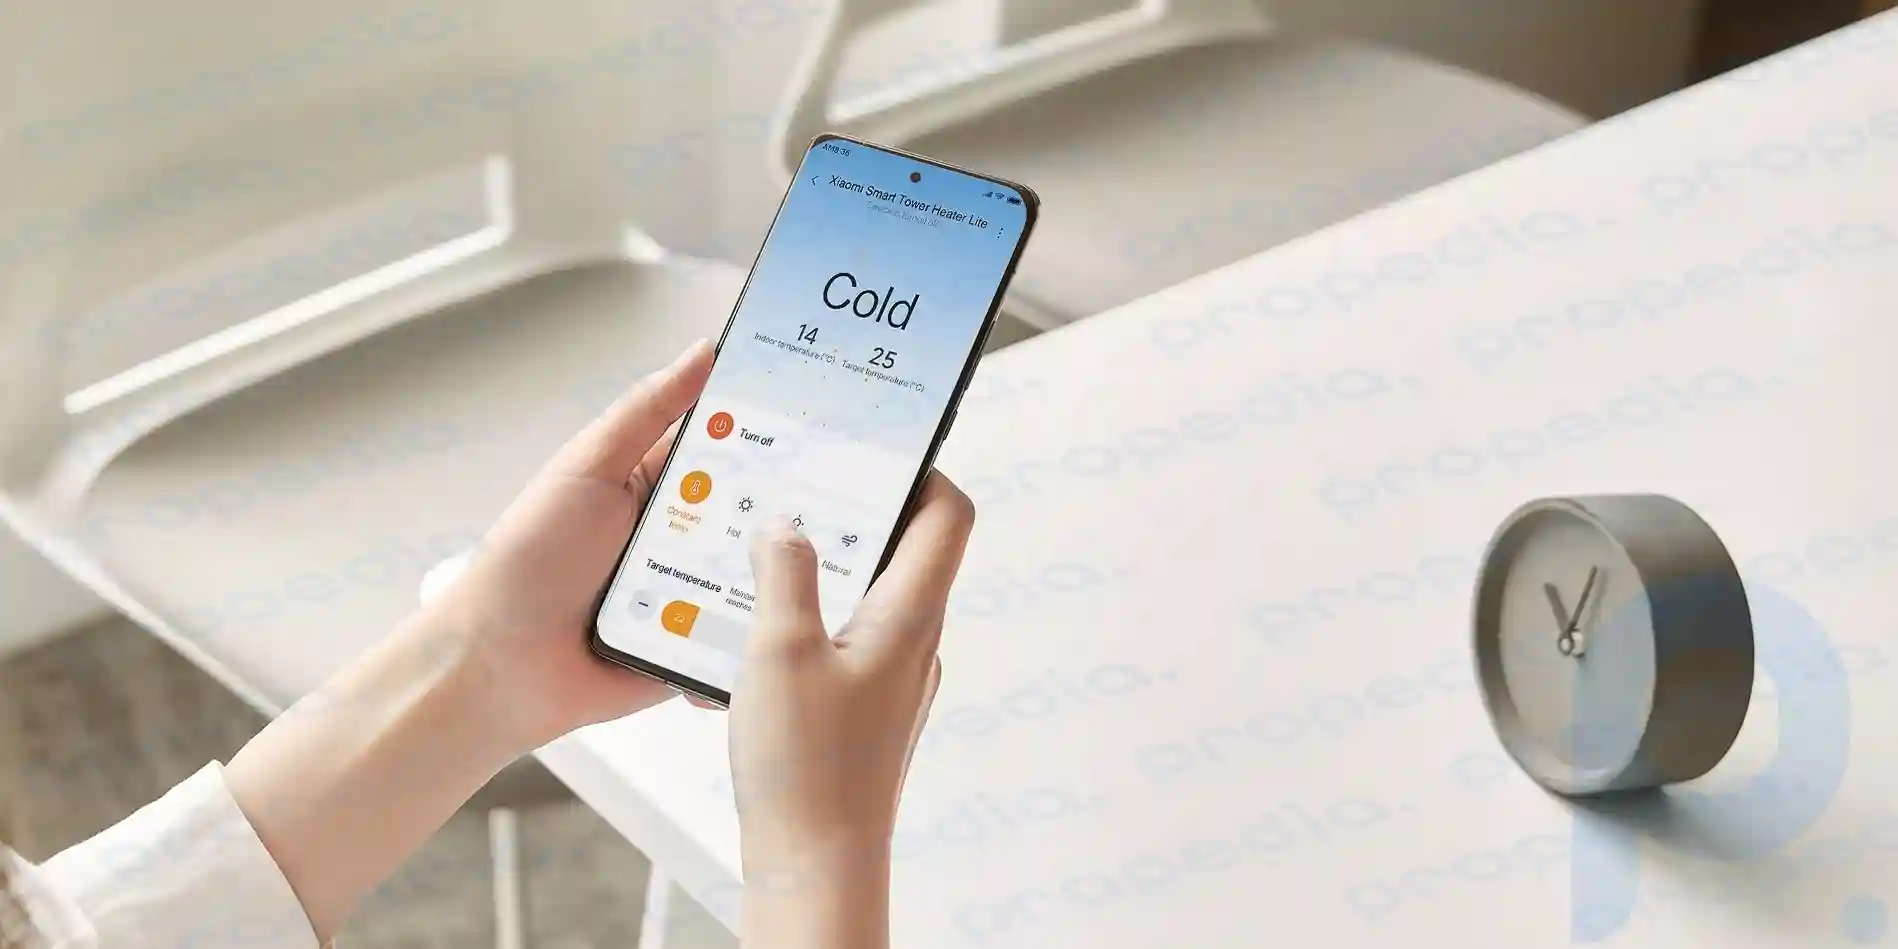 Xiaomi has released a smart heater Smart Tower Heater Lite in Russia